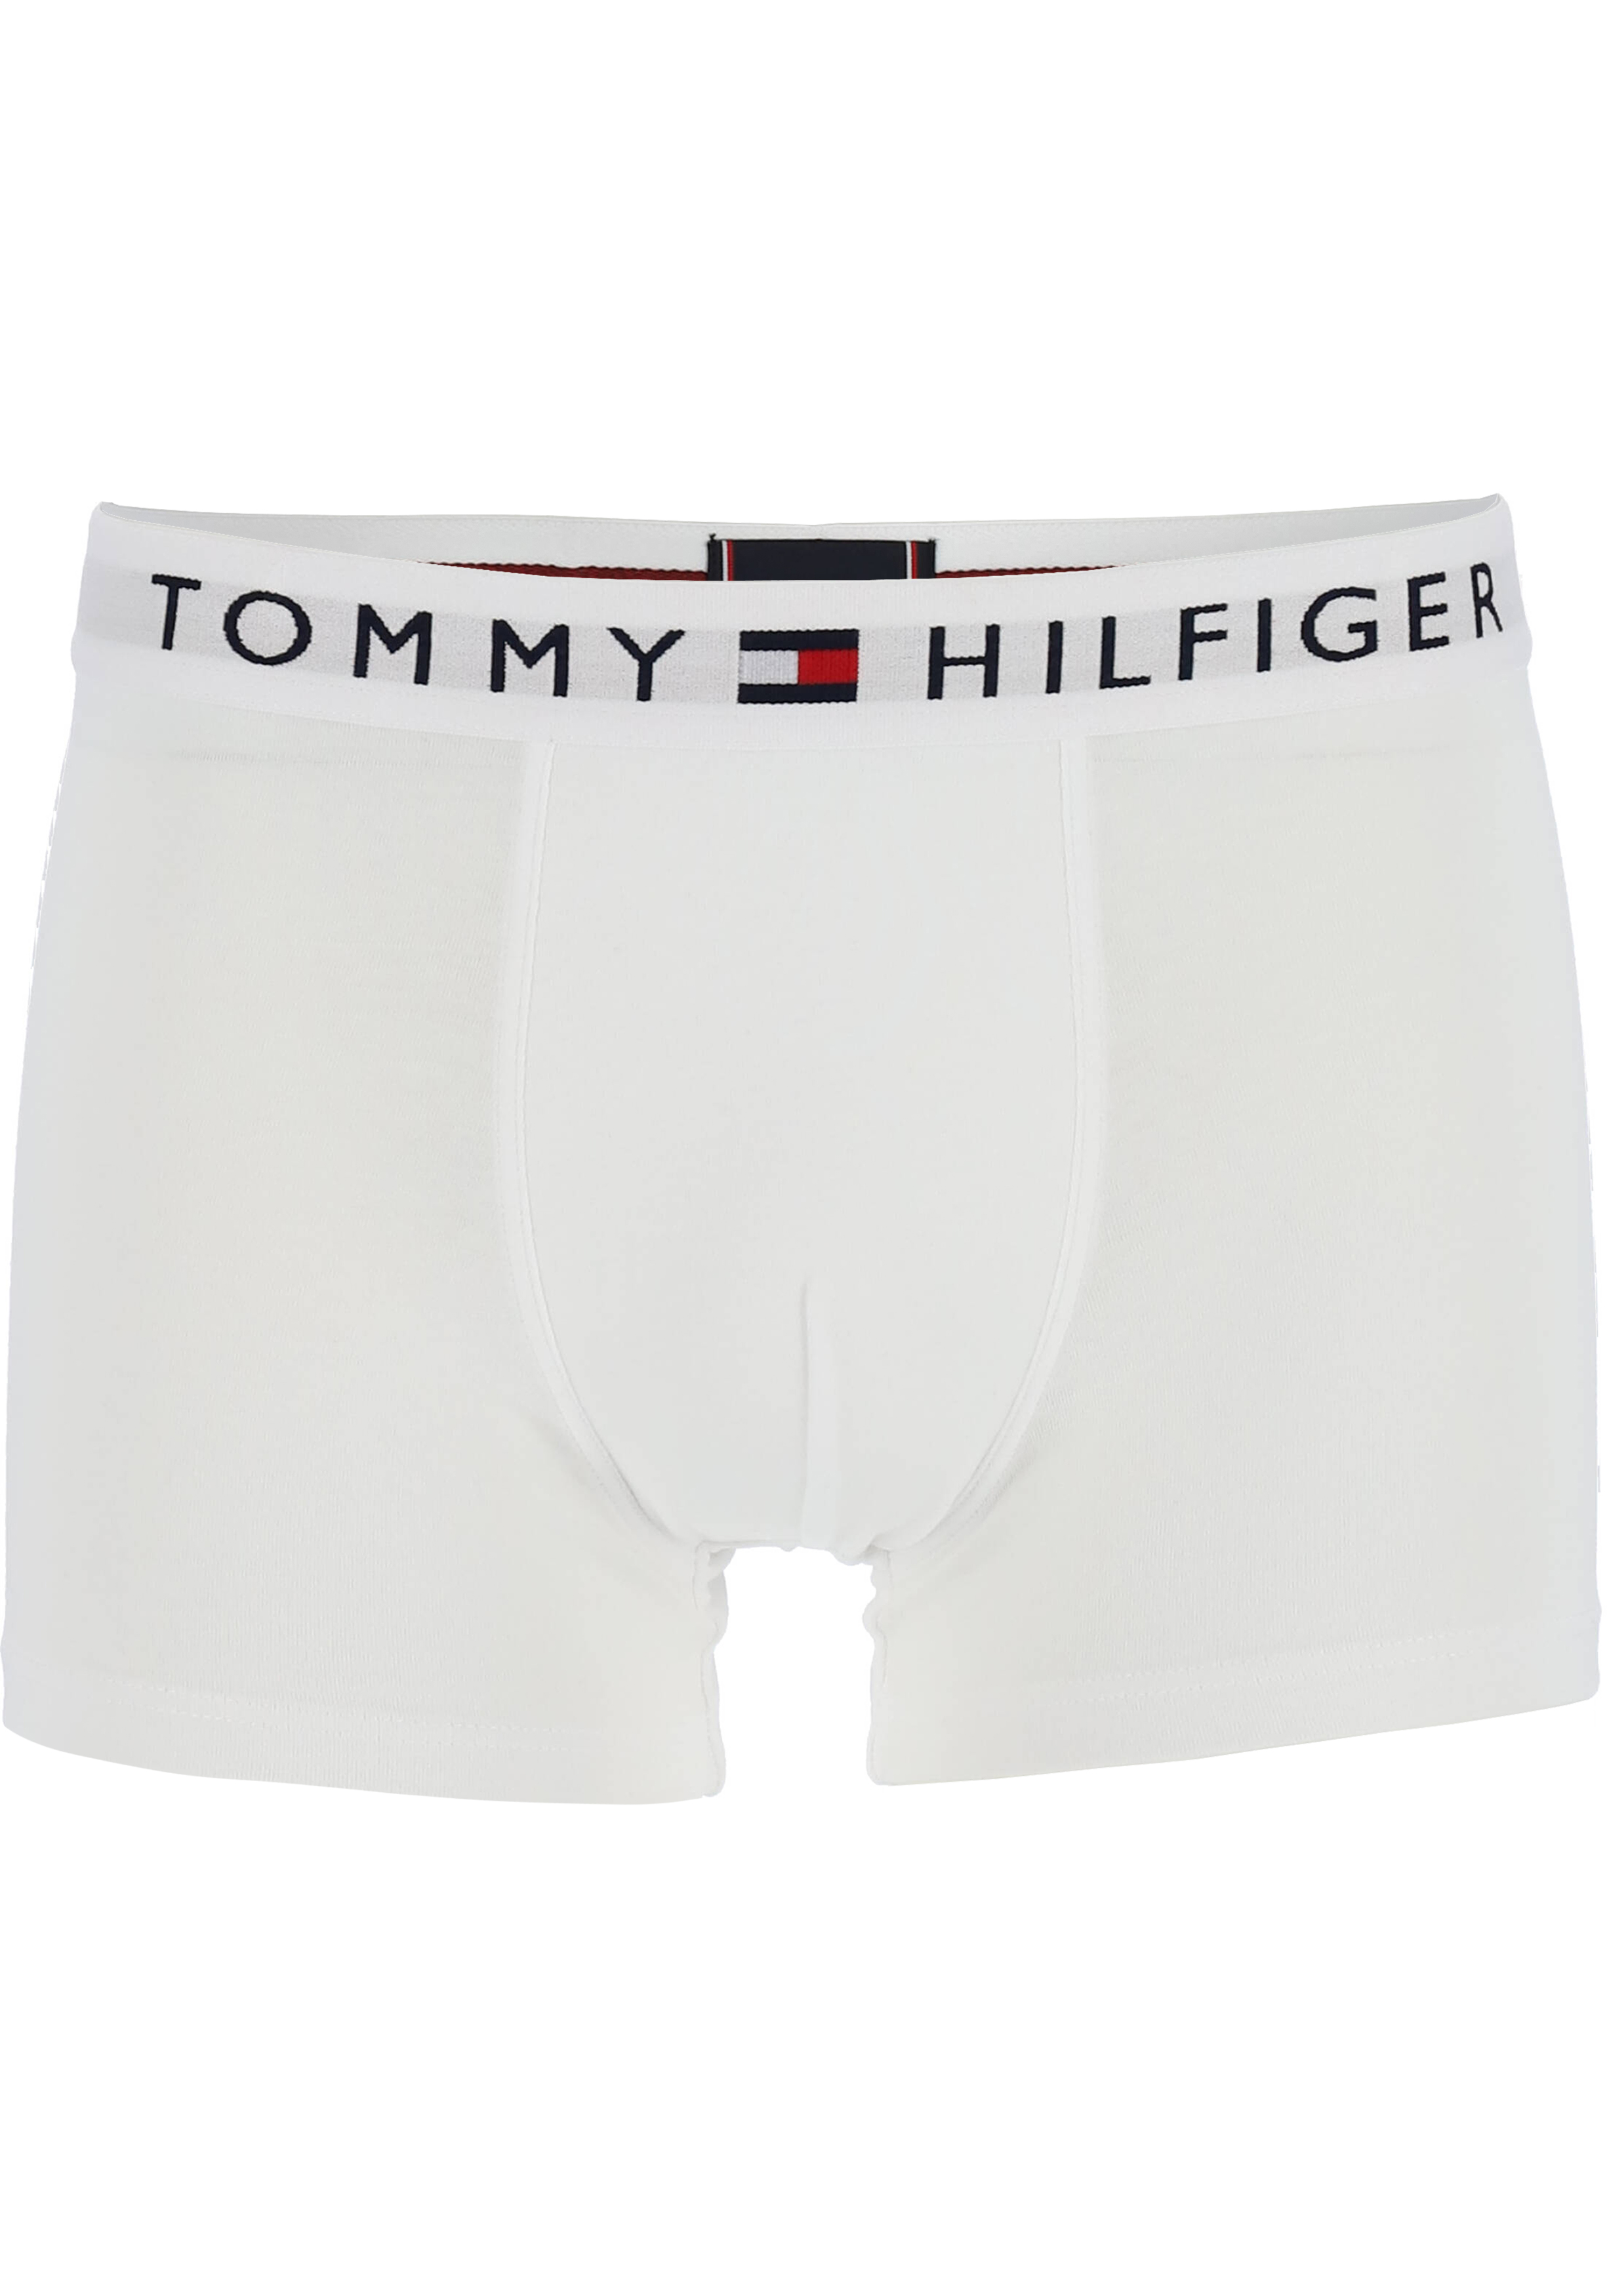 Tommy Hilfiger Tommy Original trunk (1-pack), heren boxer normale lengte, wit